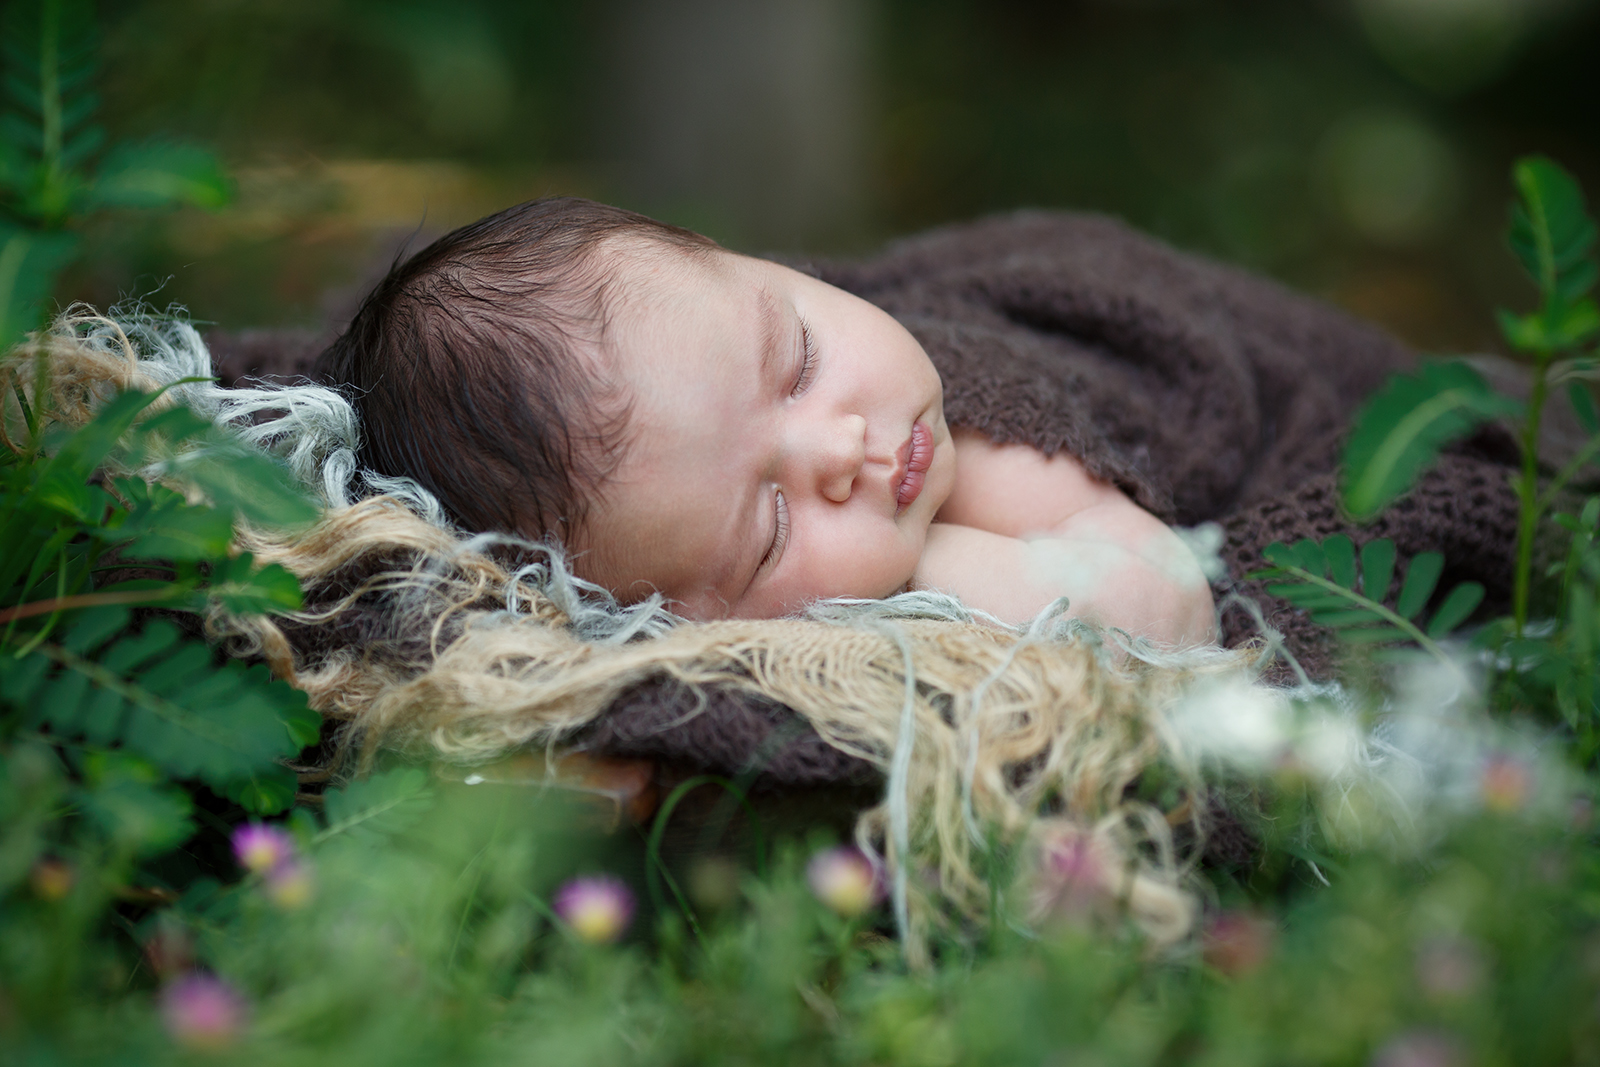 newborn photographer in Raleigh outdoor photos